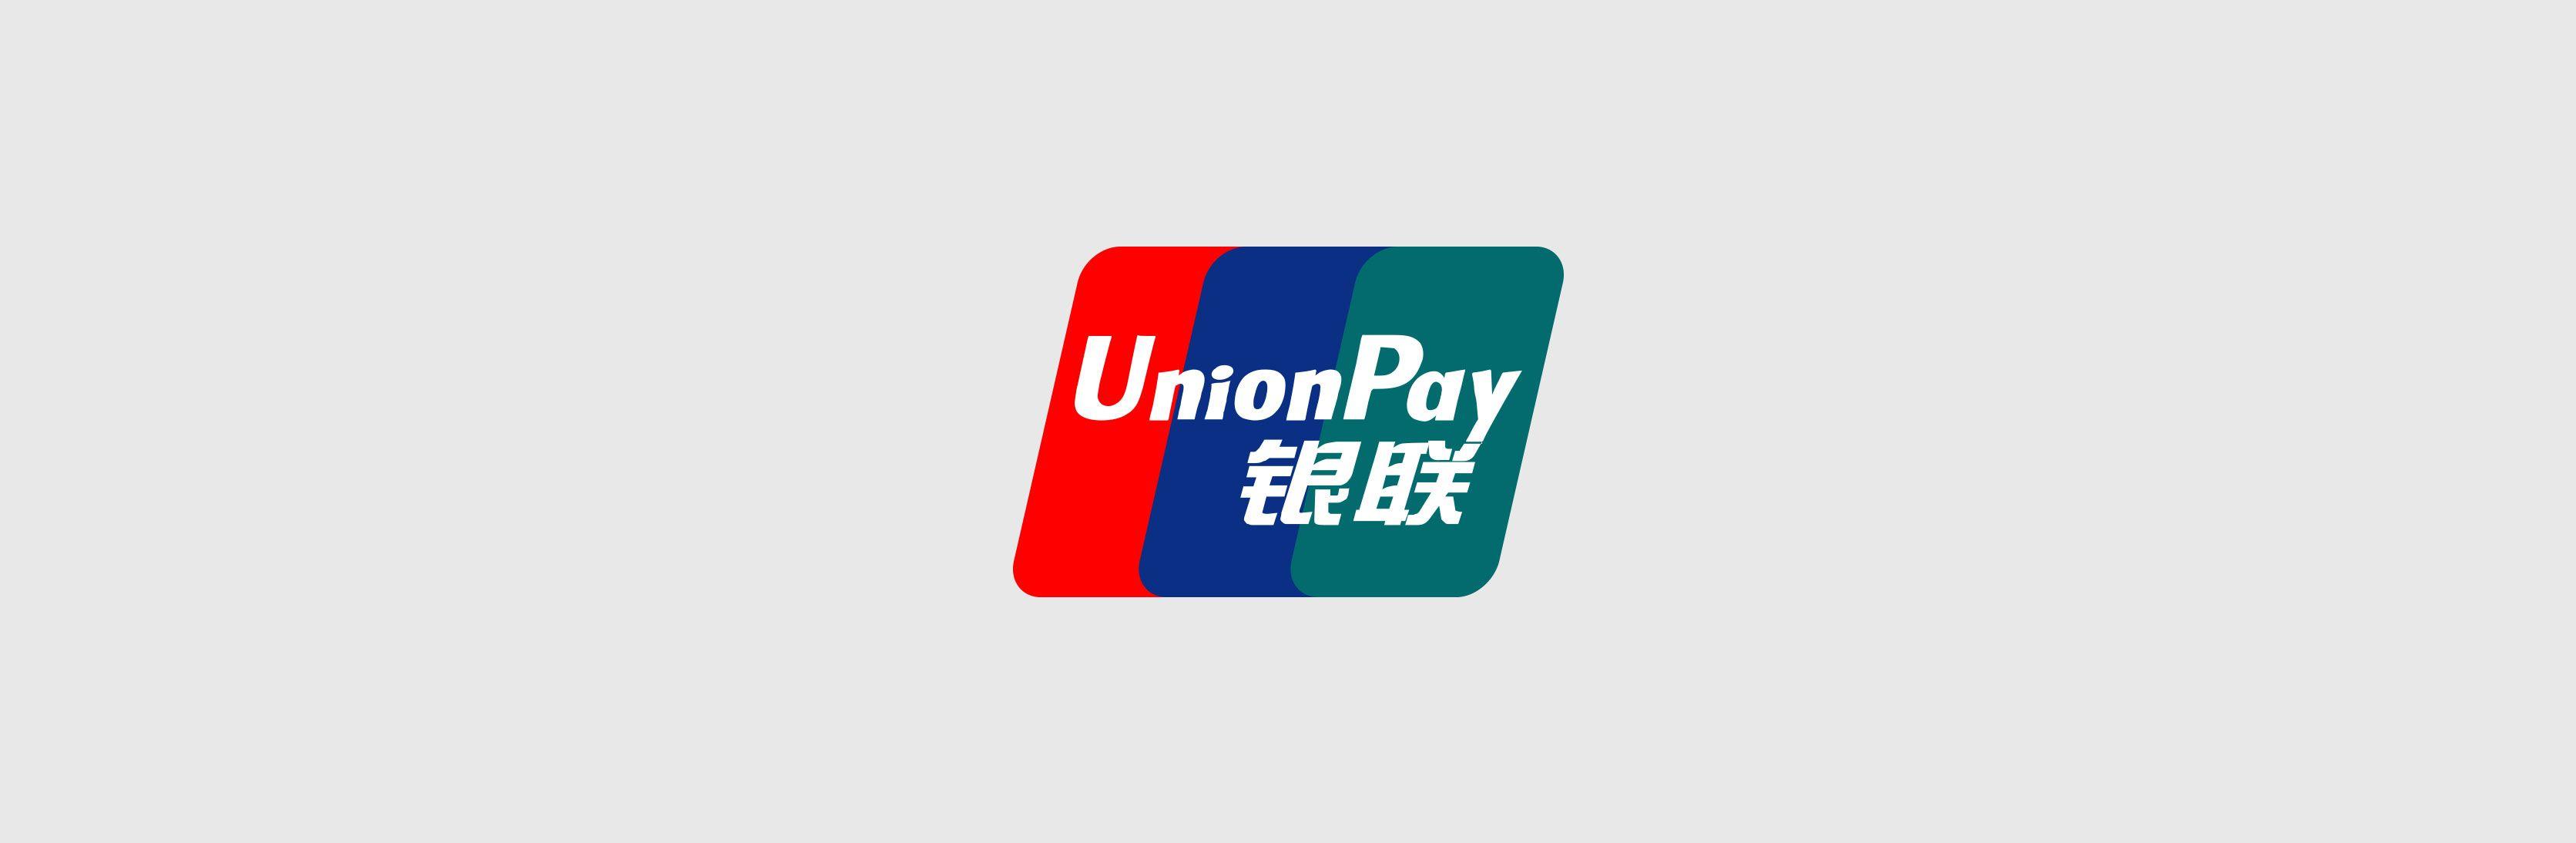 UnionPay Logo - Launching UnionPay as a Way to Pay